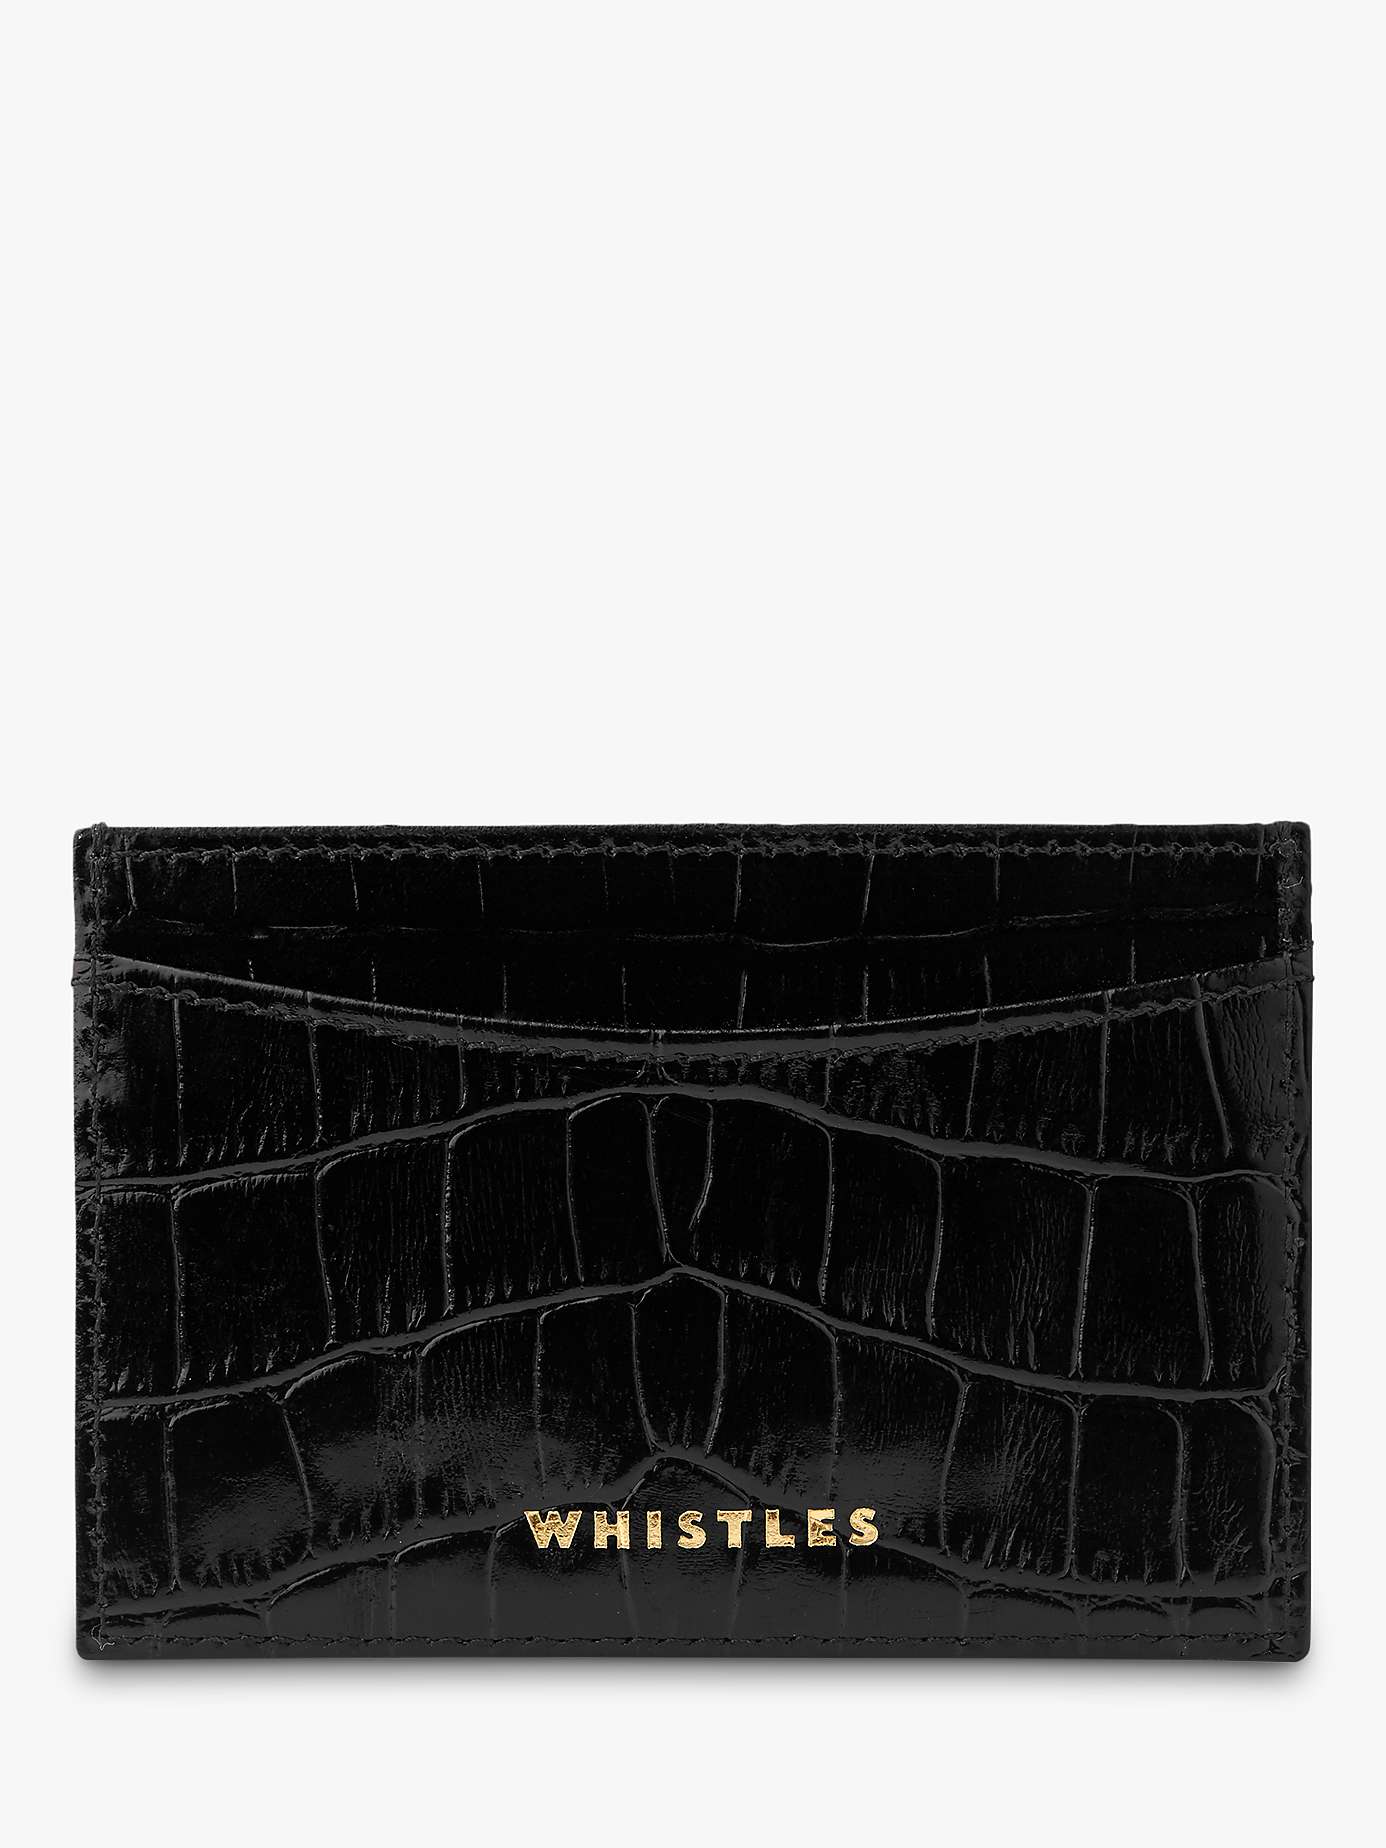 Buy Whistles Shiny Croc Leather Card Holder Online at johnlewis.com